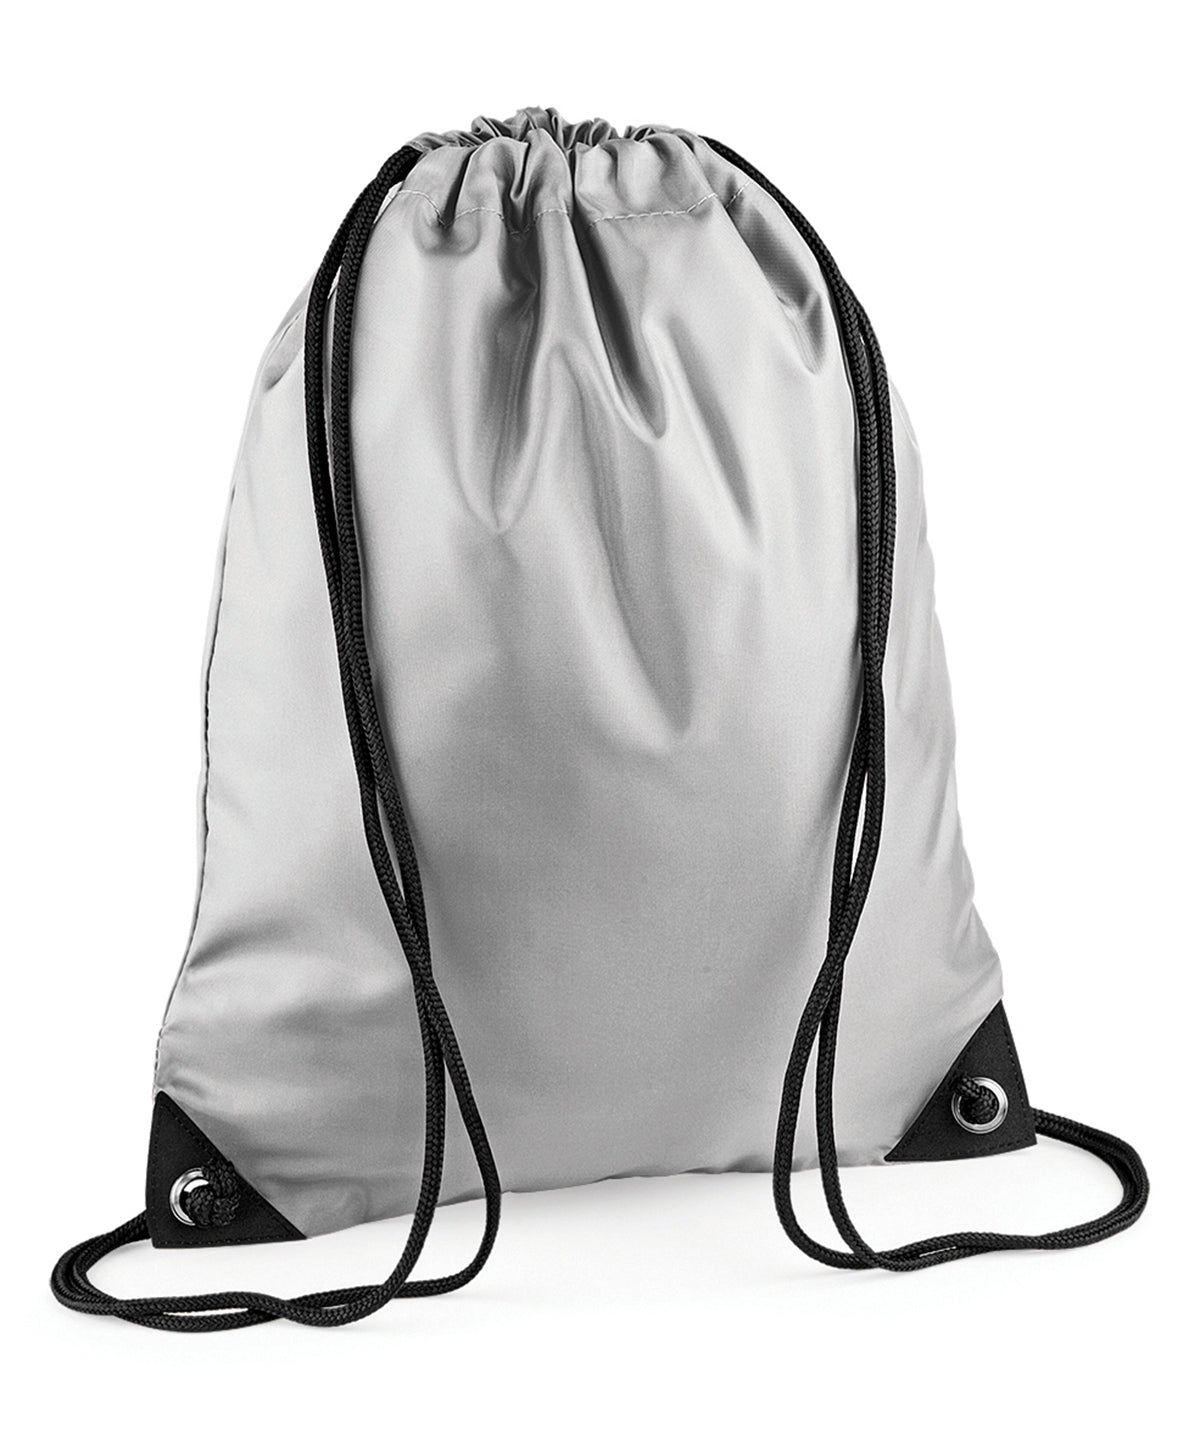 Personalised Bags - Silver Bagbase Premium gymsac